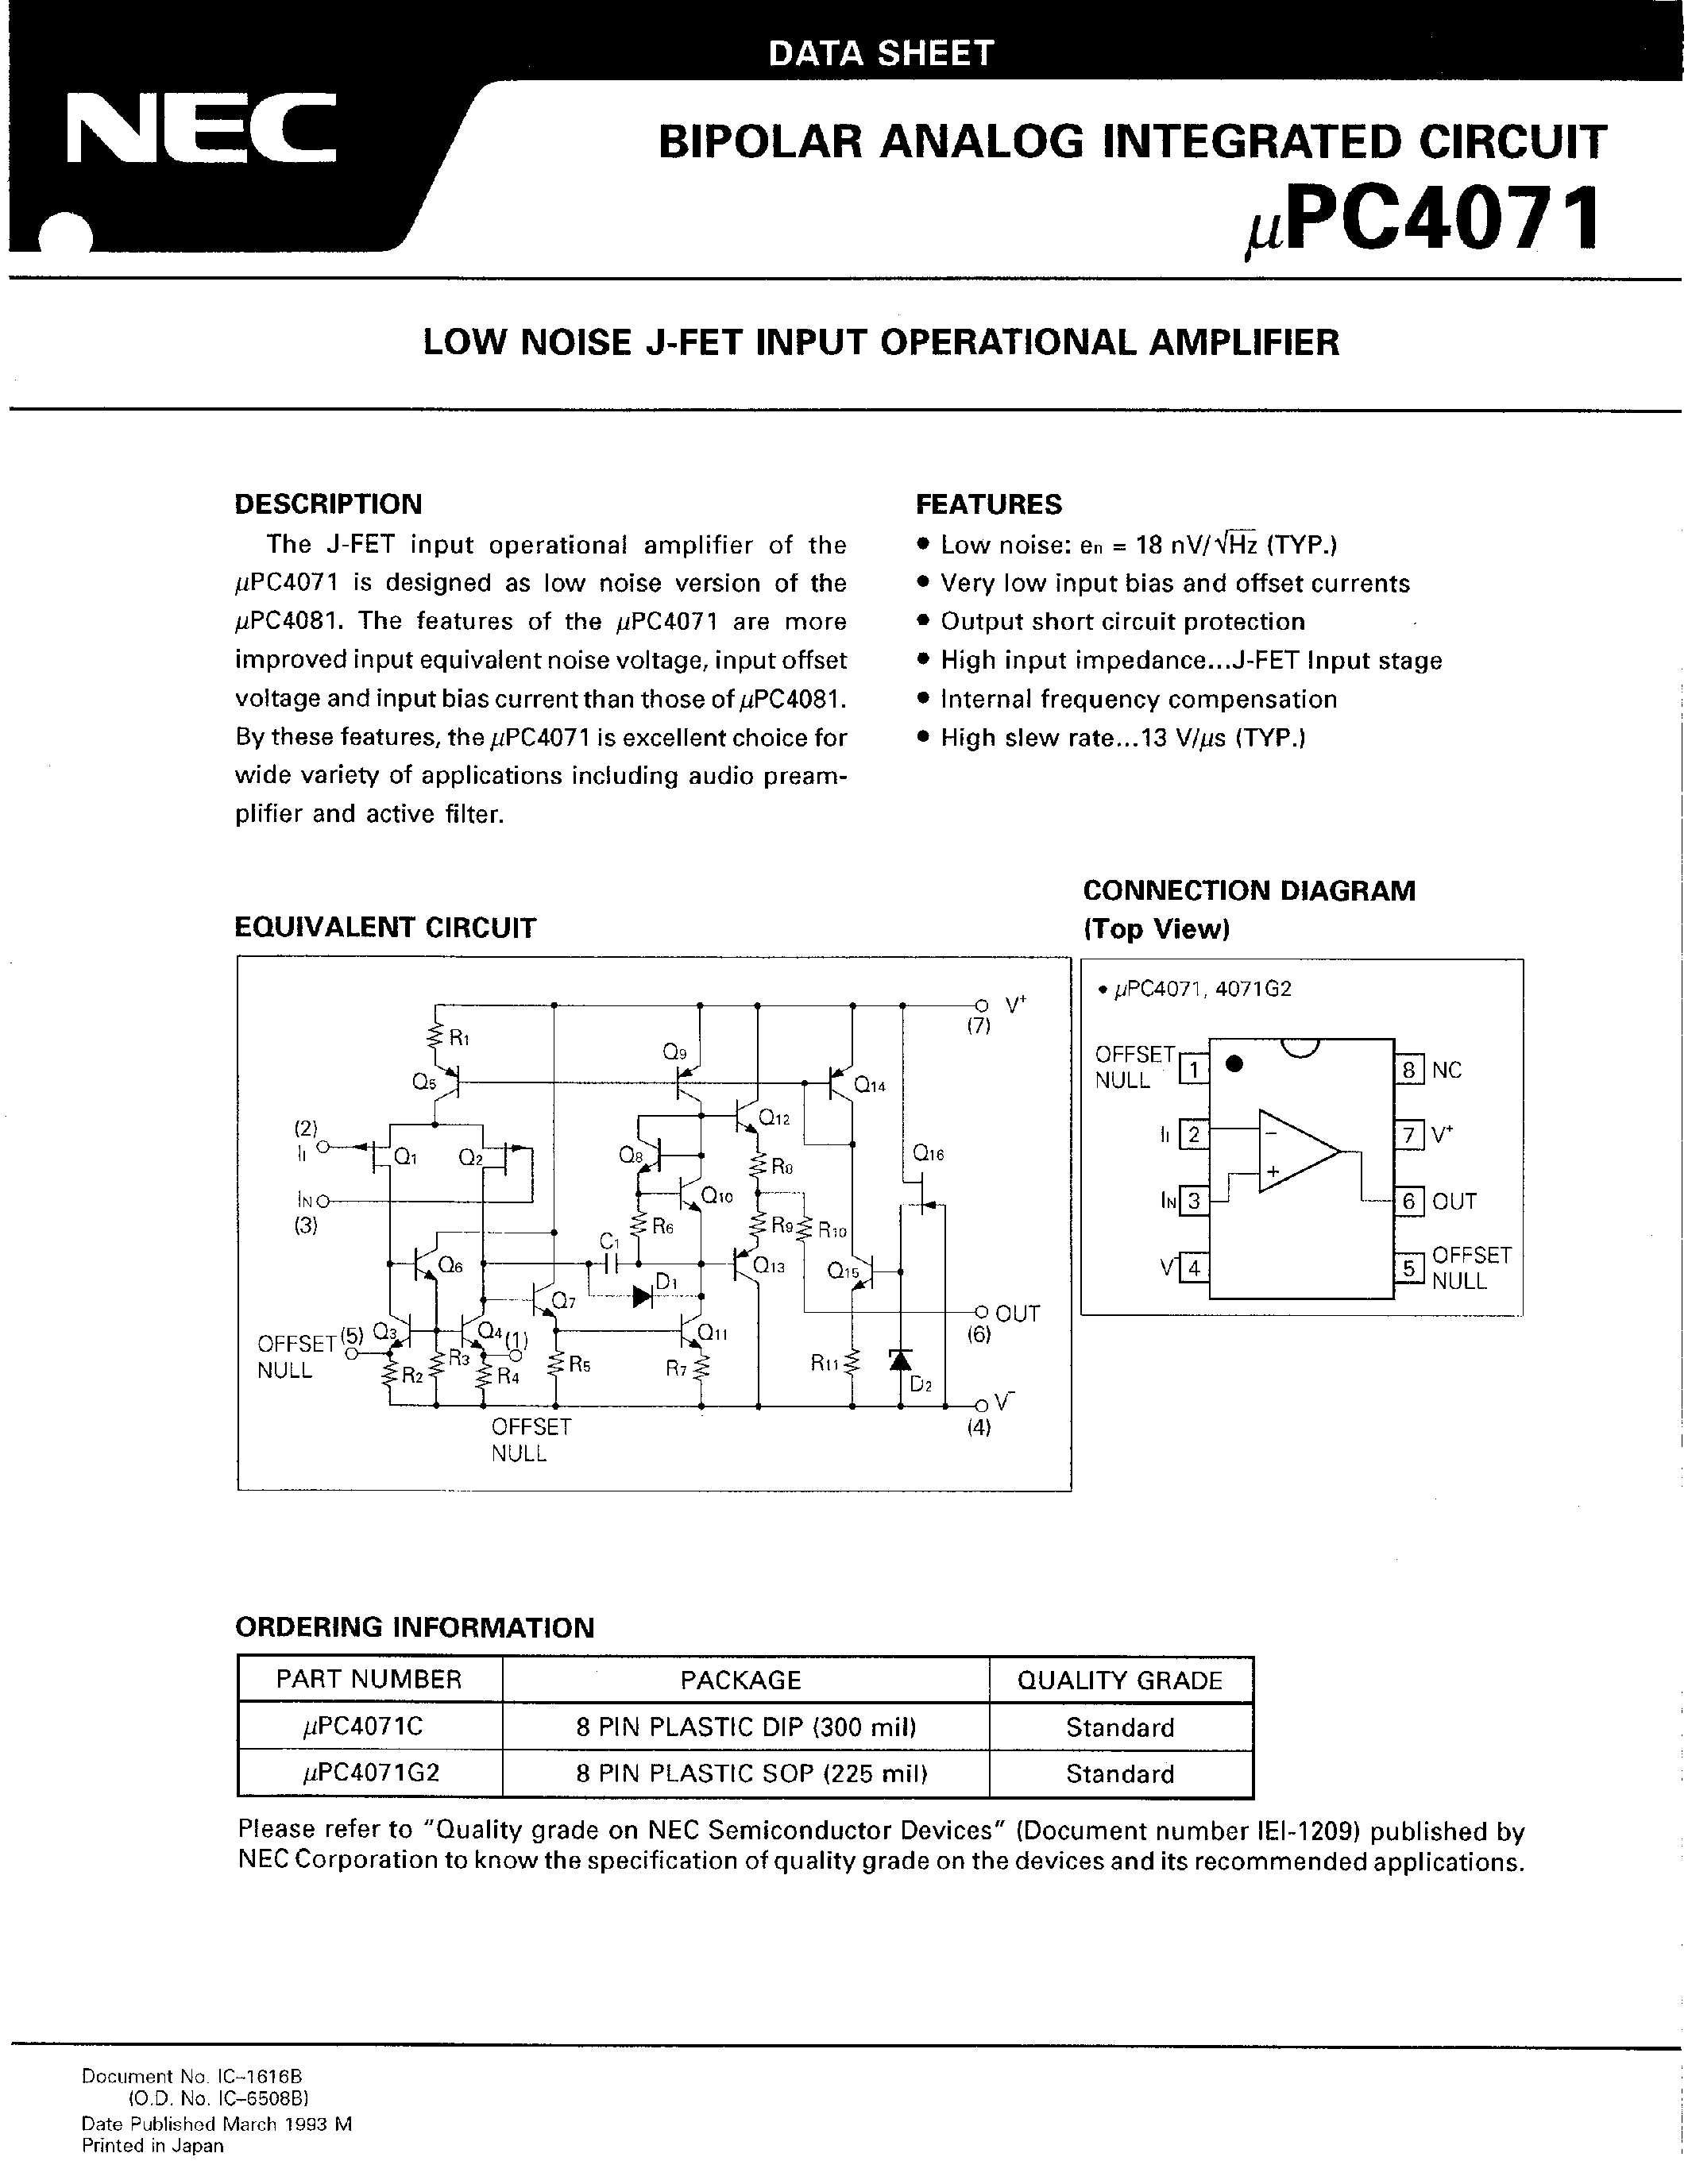 Даташит UPC4071 - LOW NOISE J-FET INPUT OPERATIONAL AMPLIFIER страница 1